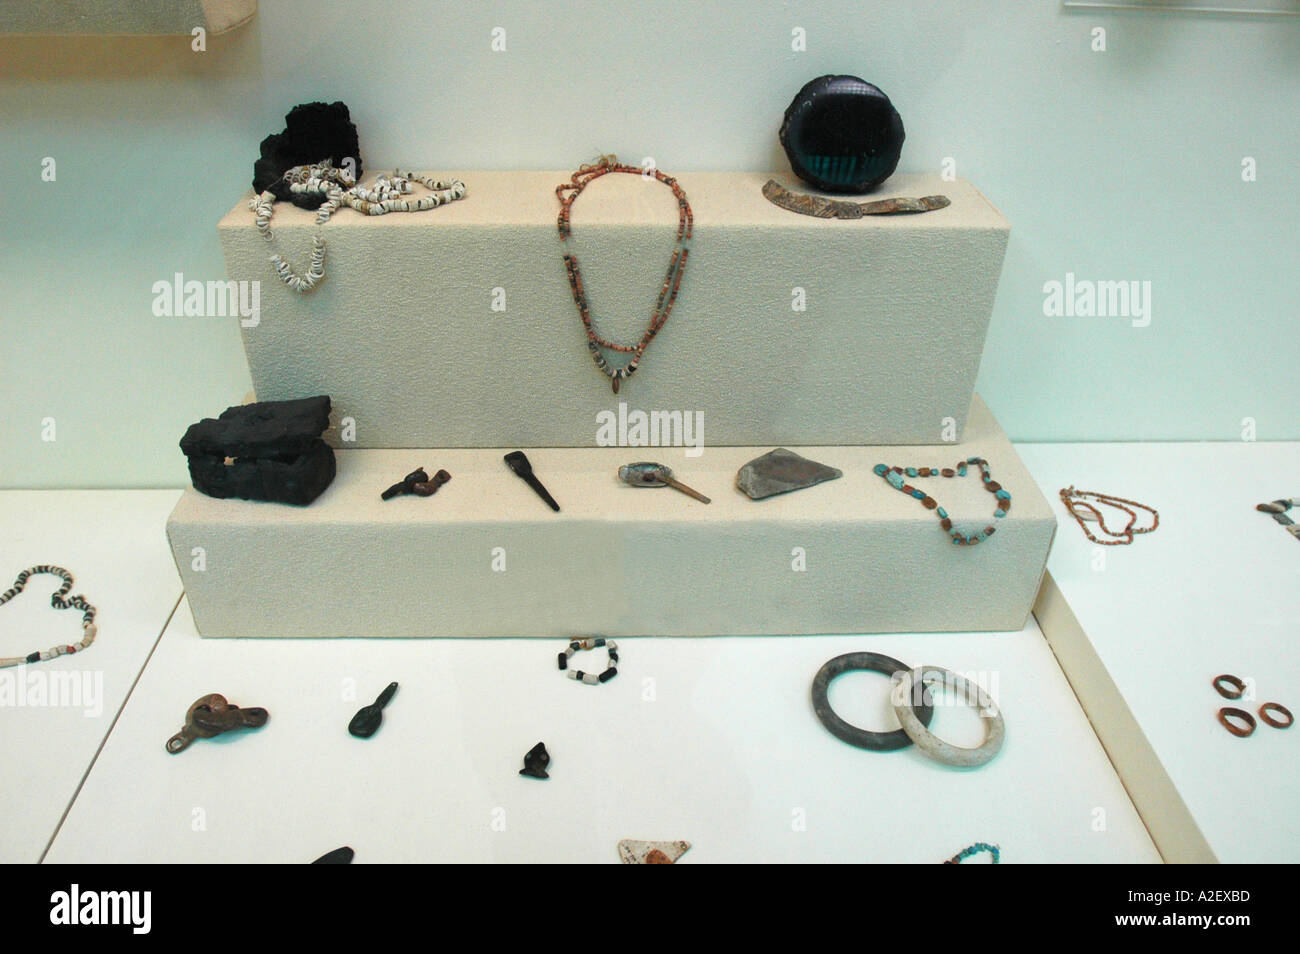 Catal Huyuk artifacts ornaments founds in excavations Anatolian Civilization Museum Ankara Turkey Stock Photo